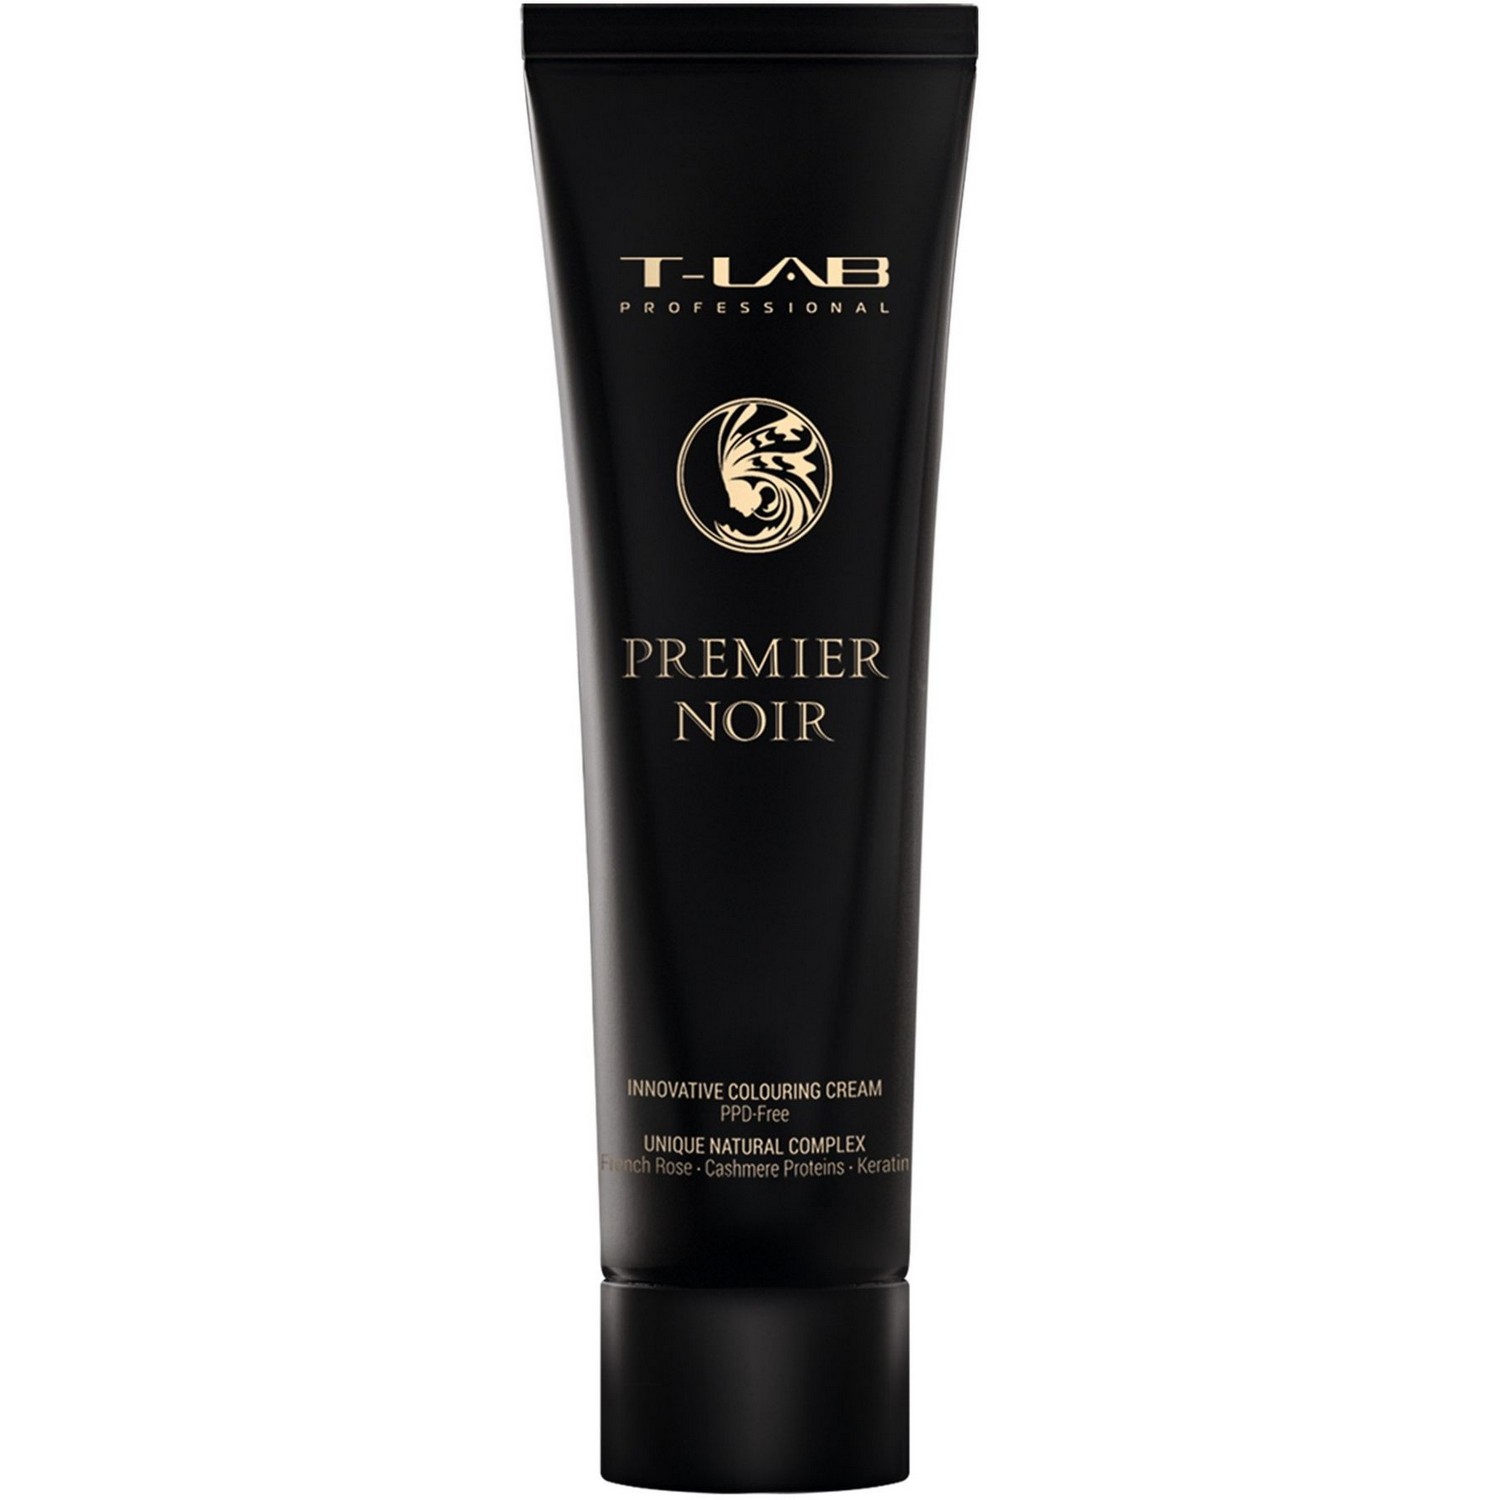 Крем-краска T-LAB Professional Premier Noir colouring cream, оттенок 4.0 (natural brown) - фото 1